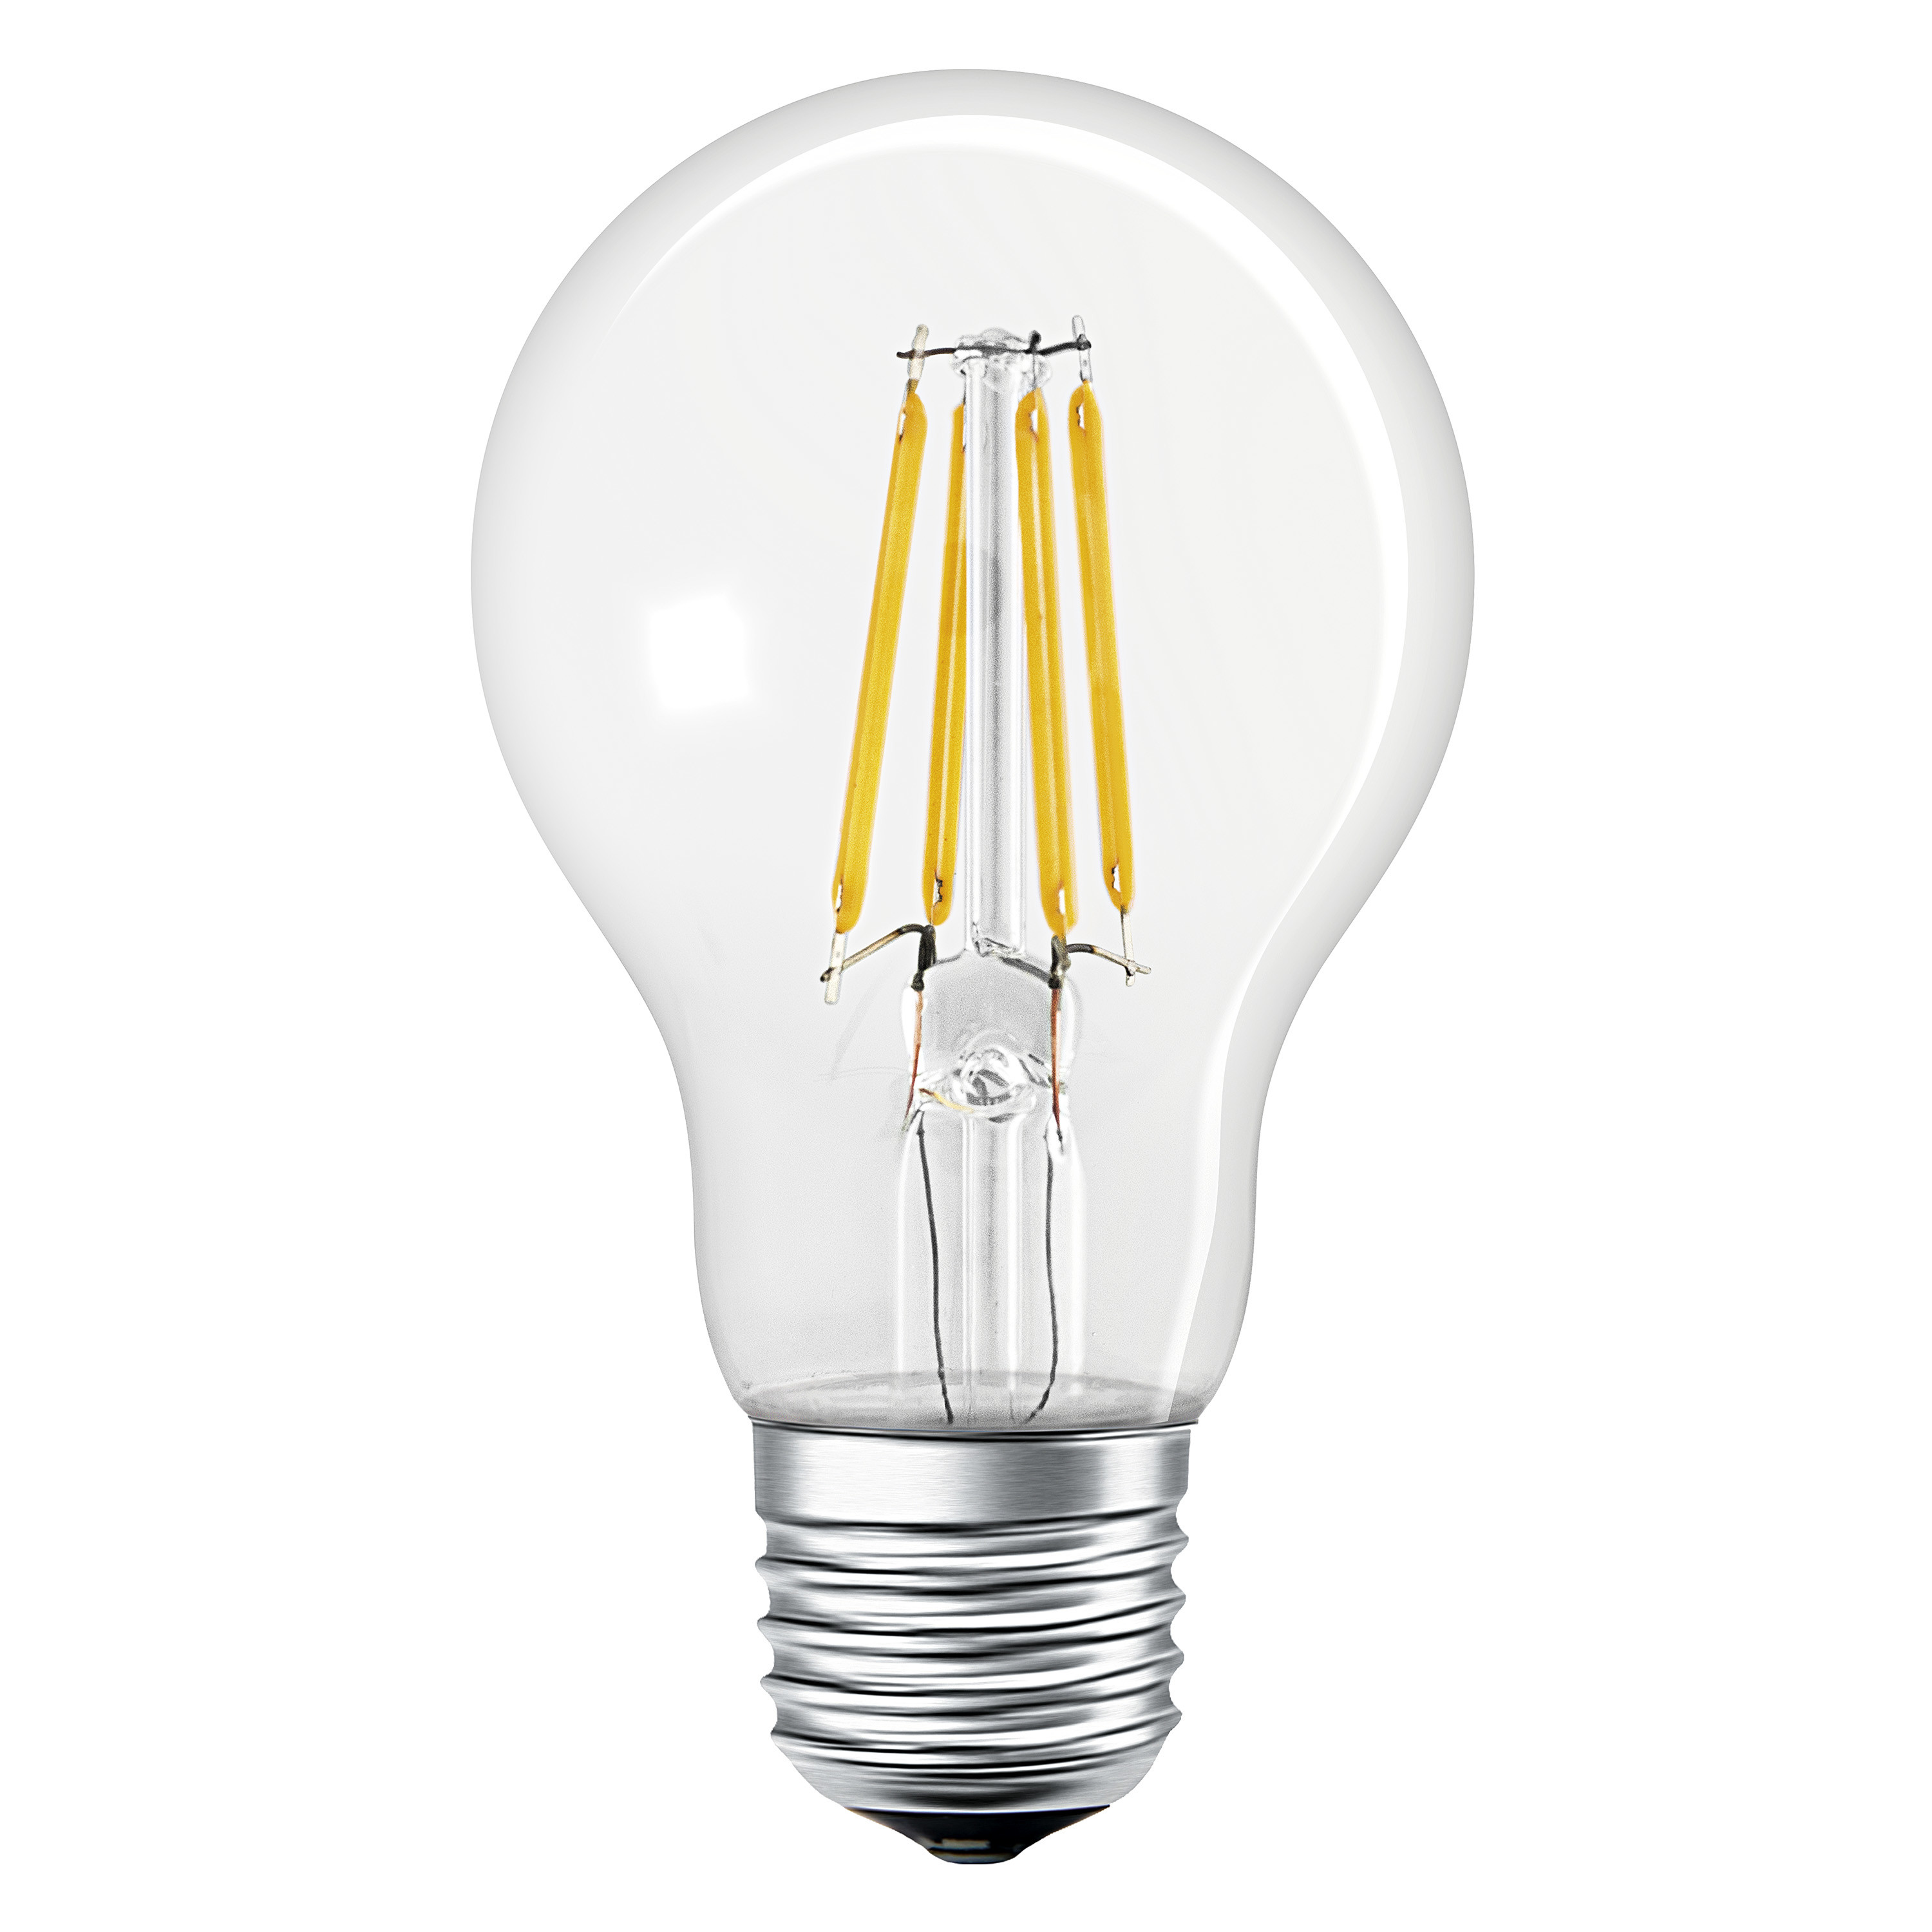 LEDVANCE VOLKSLICHT SMART+ Filament Lampe Classic LED 806 Warmweiß Dimmable Lumen